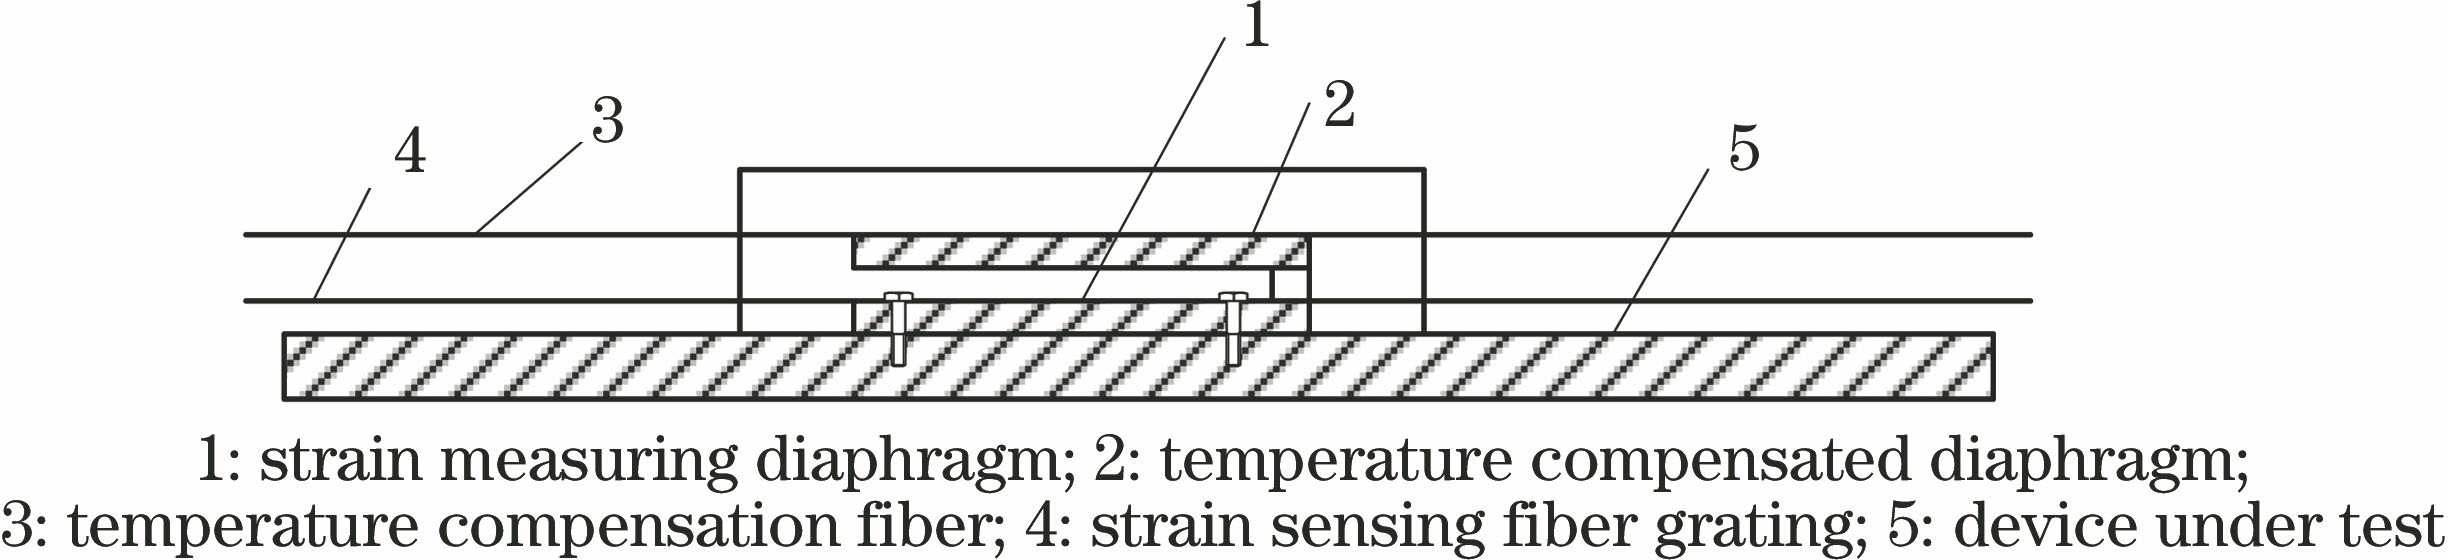 Schematic diagram of sensing device